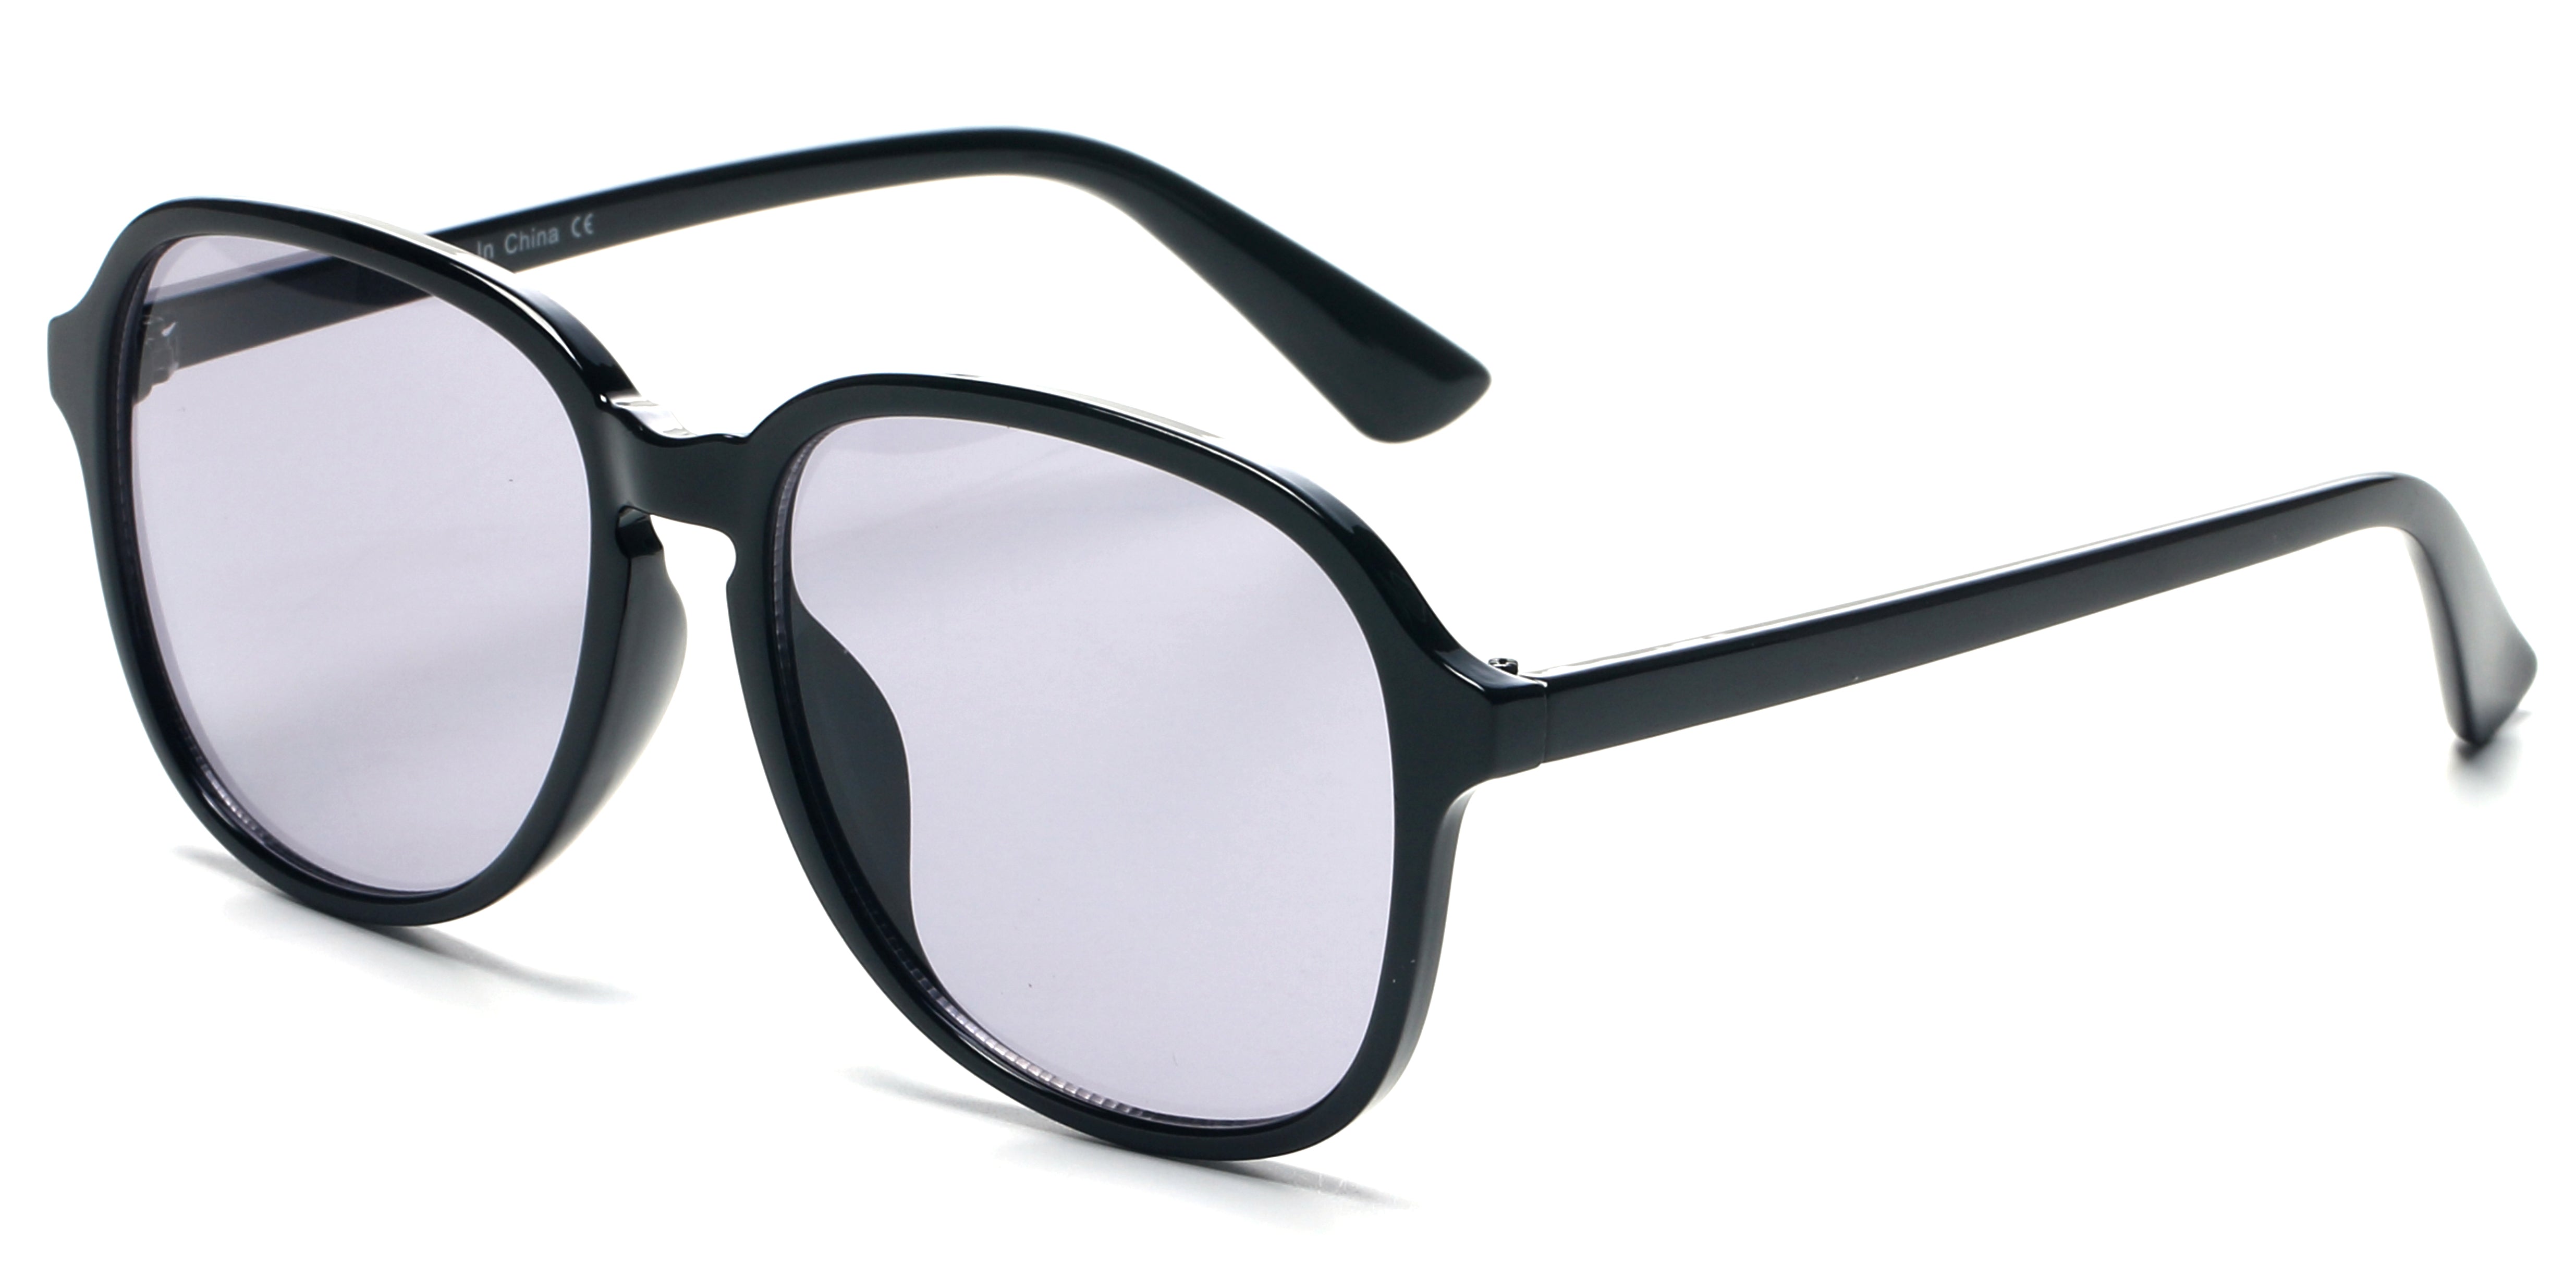 S1109 - Round Tinted Oversized Women Fashion Sunglasses Black